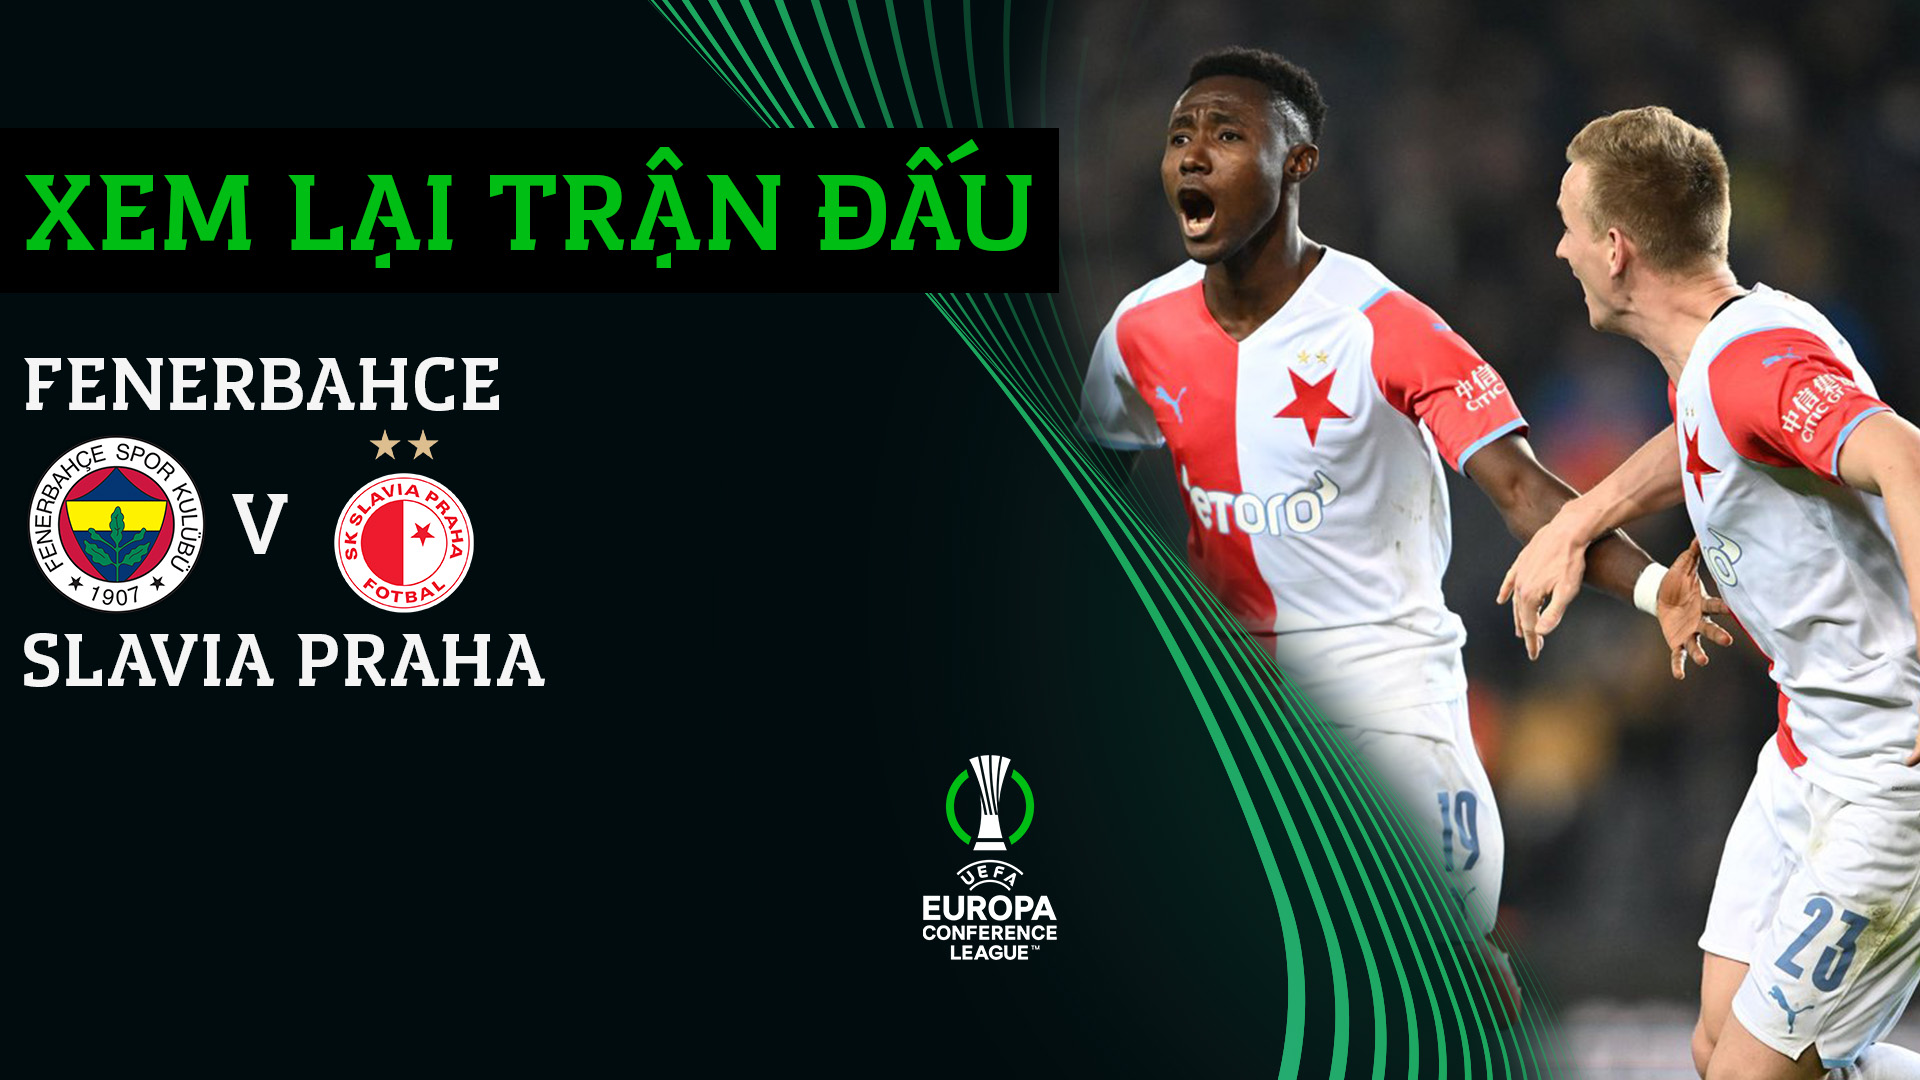 Fenerbahce - Slavia Praha | Xem lại trận đấu - UEFA Europa Conference League